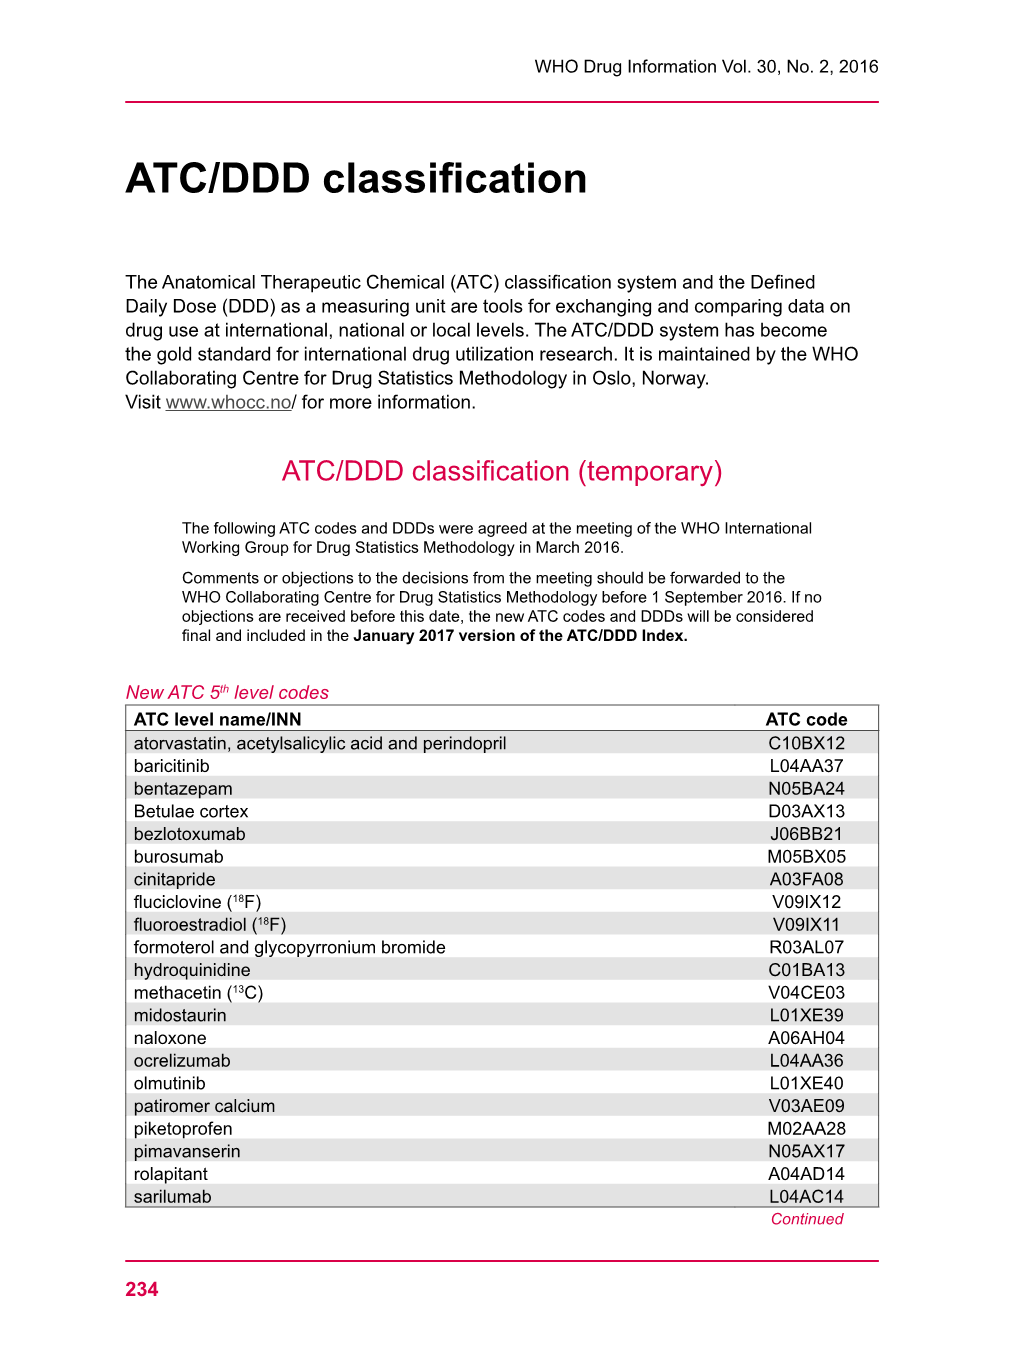 ATC/DDD Classification